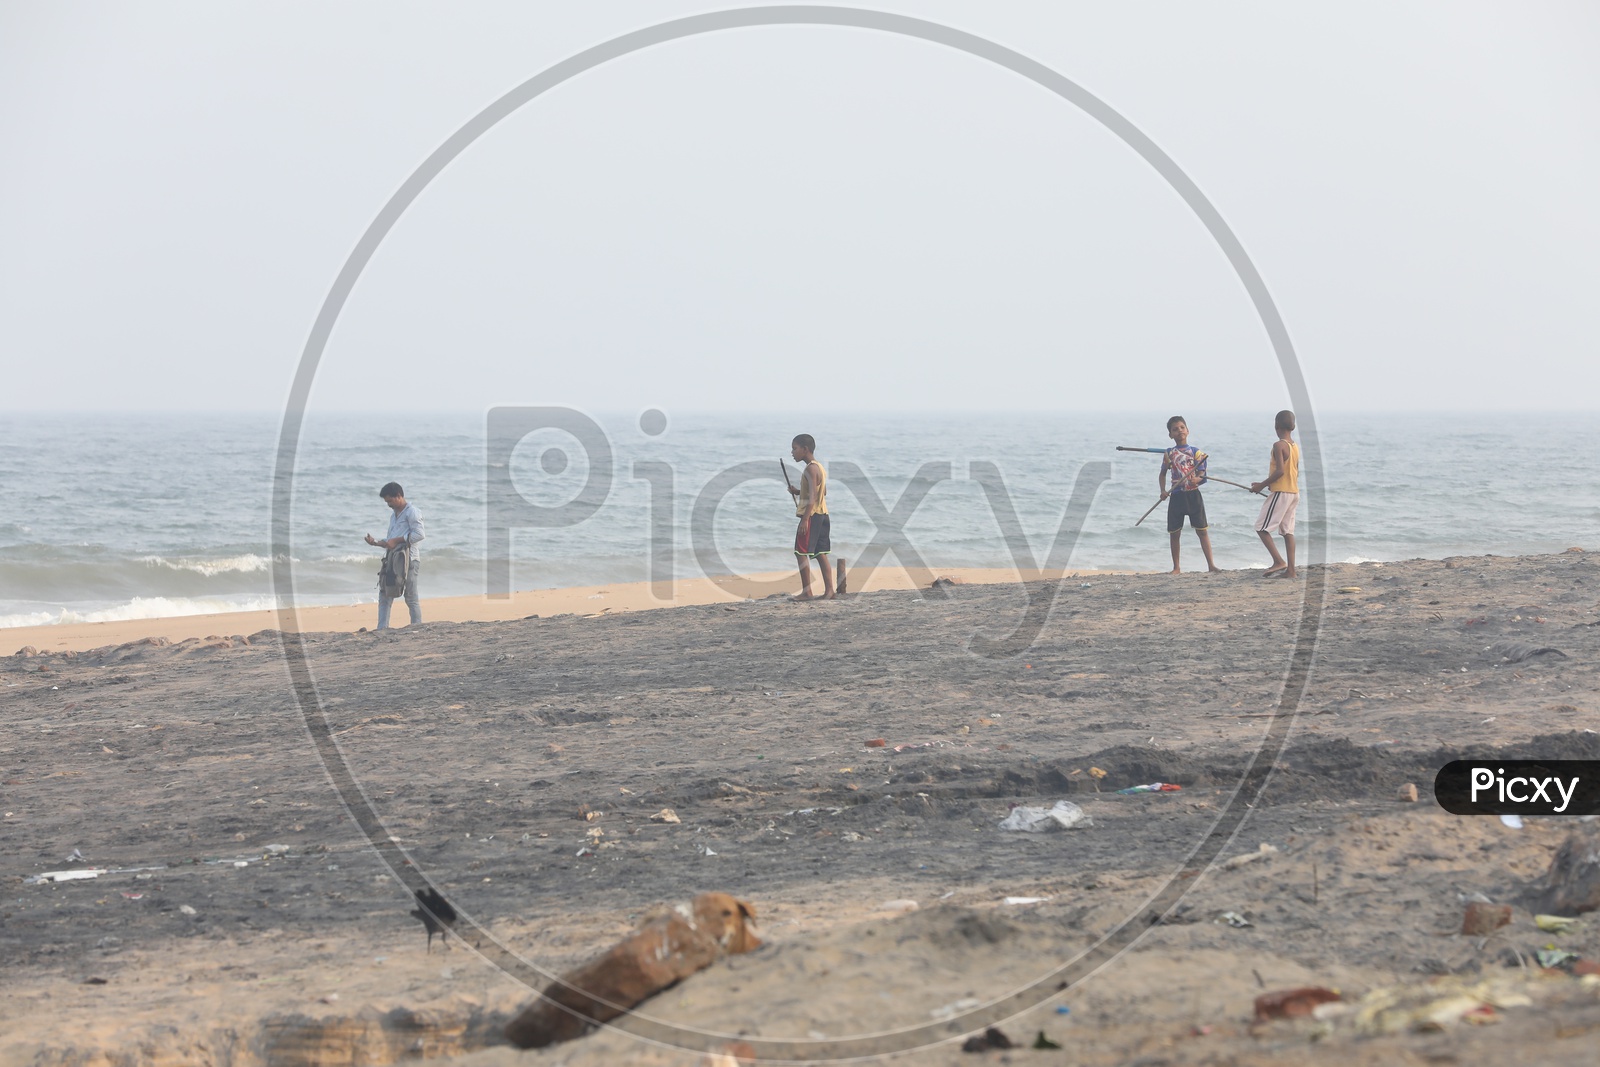 Children Playing  In a Beach